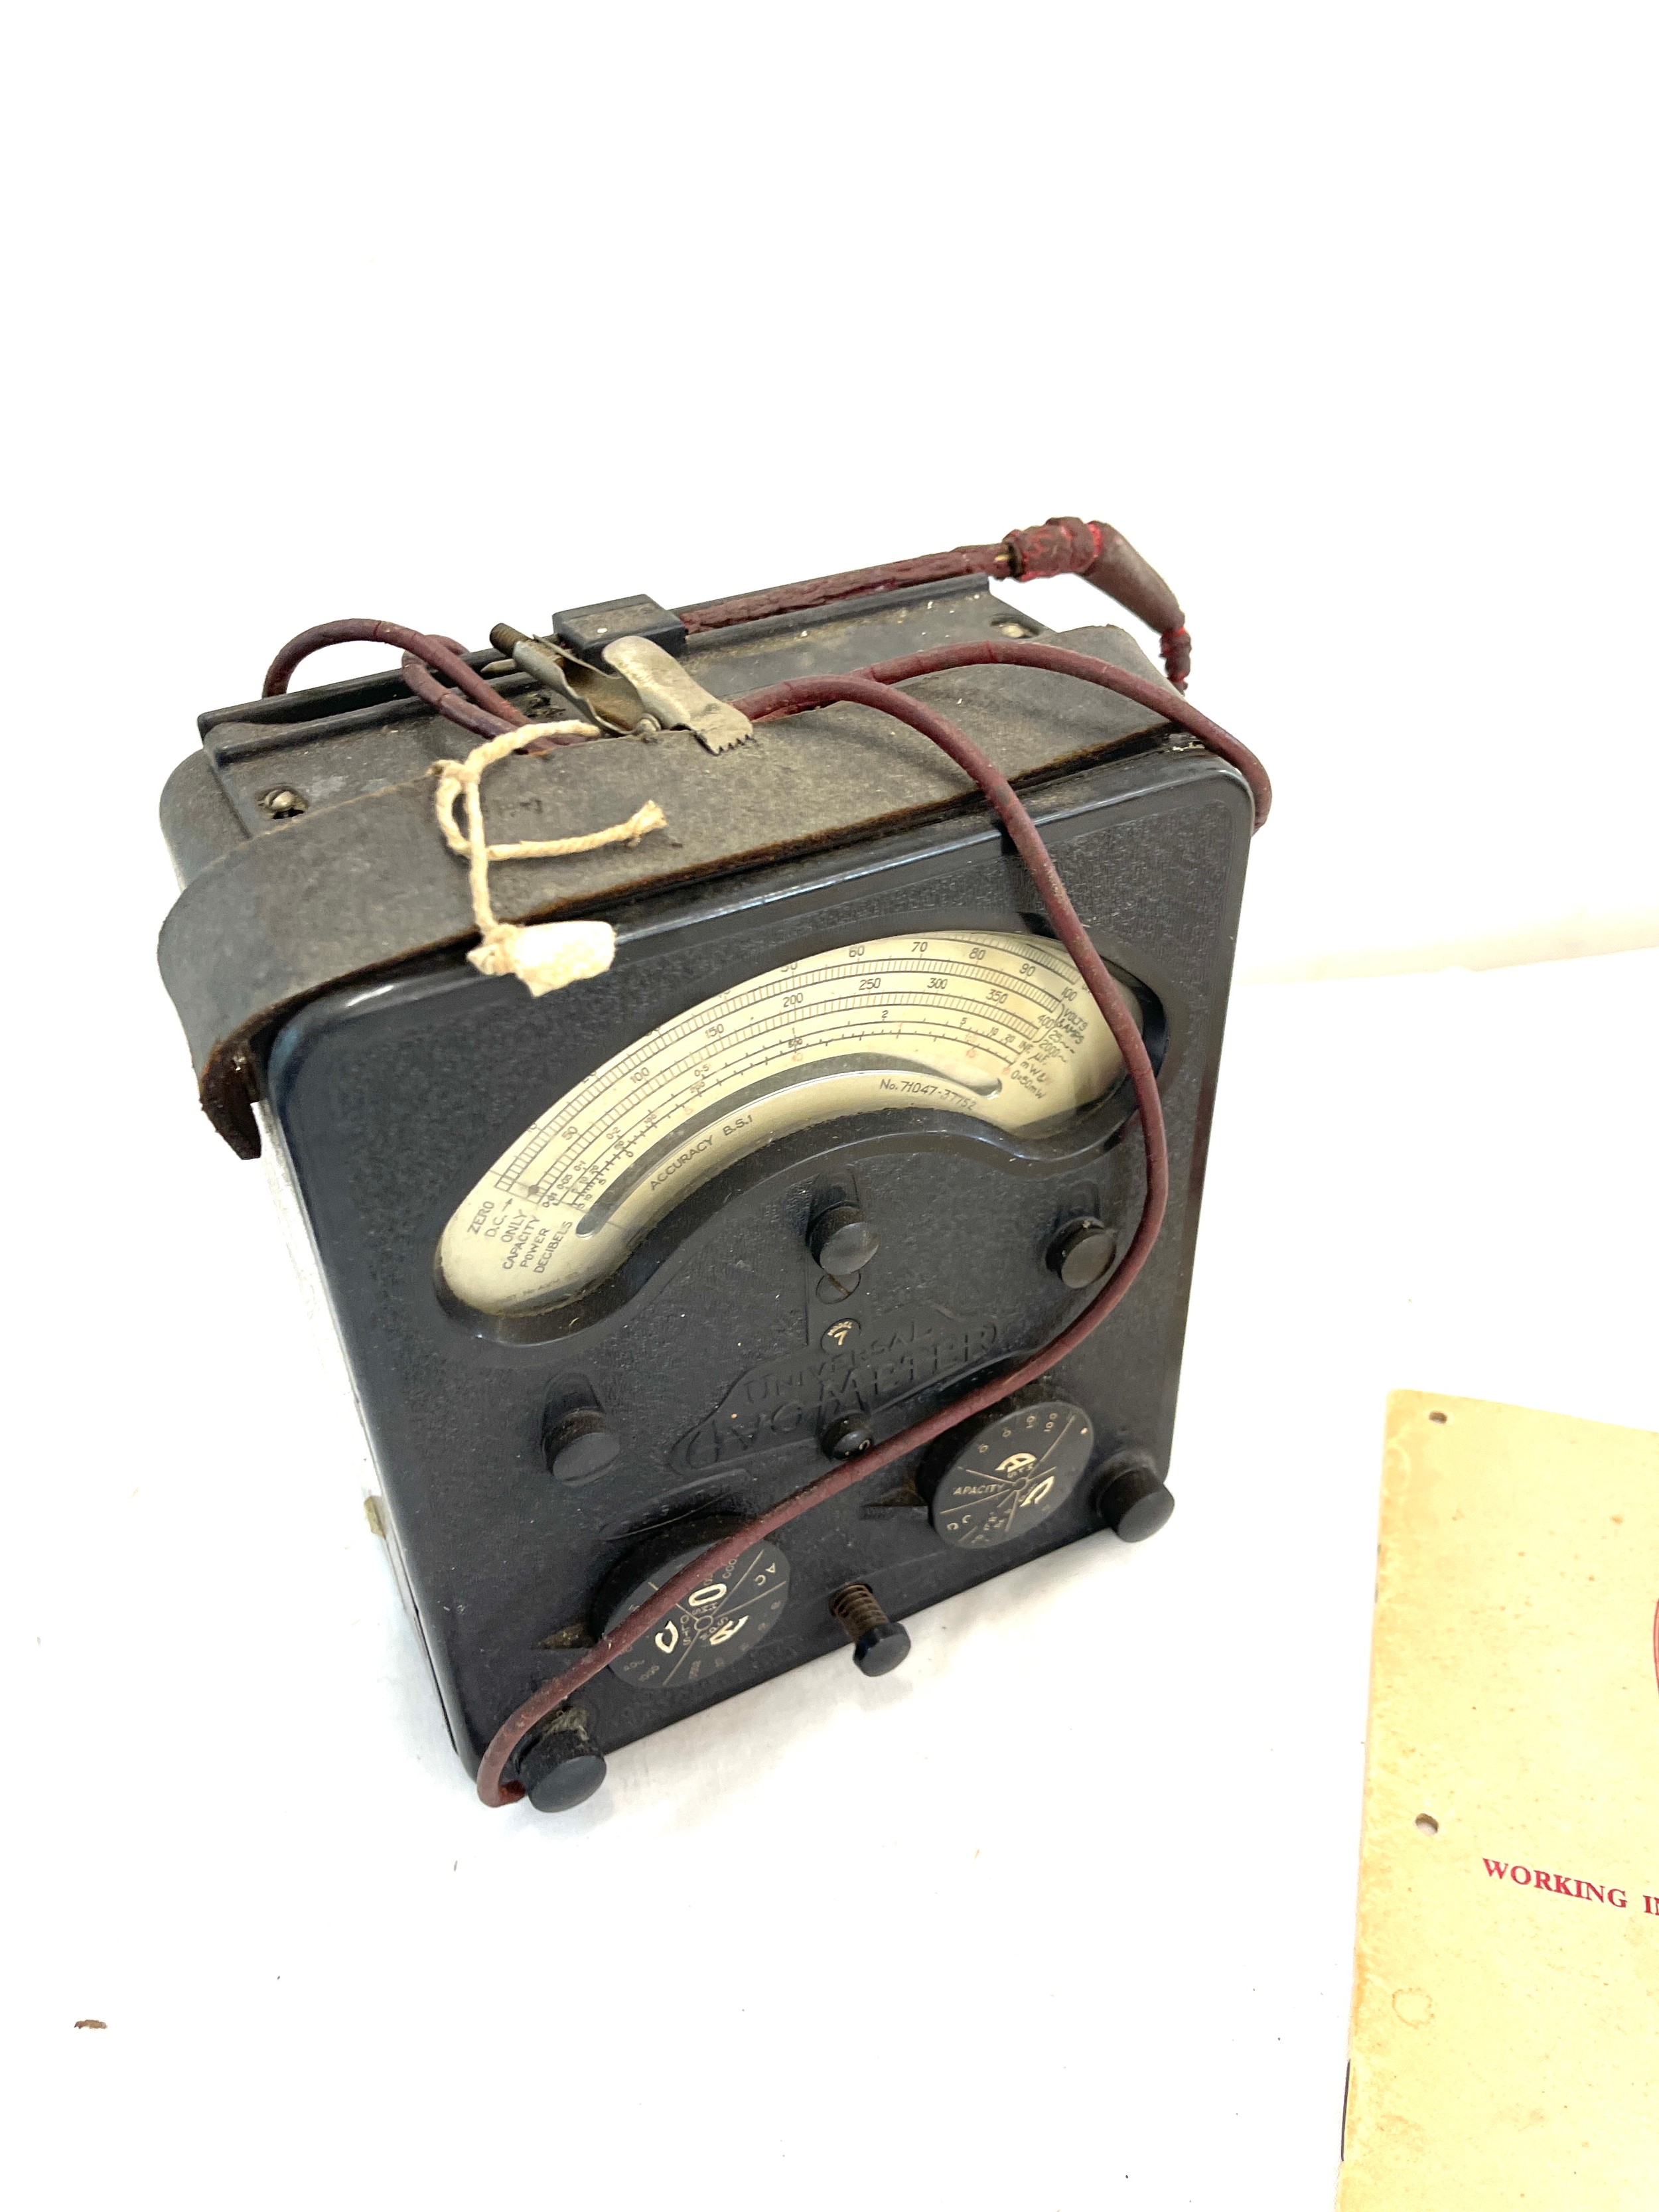 Vintage Model 7 Universal Avometer, untested - Image 2 of 3